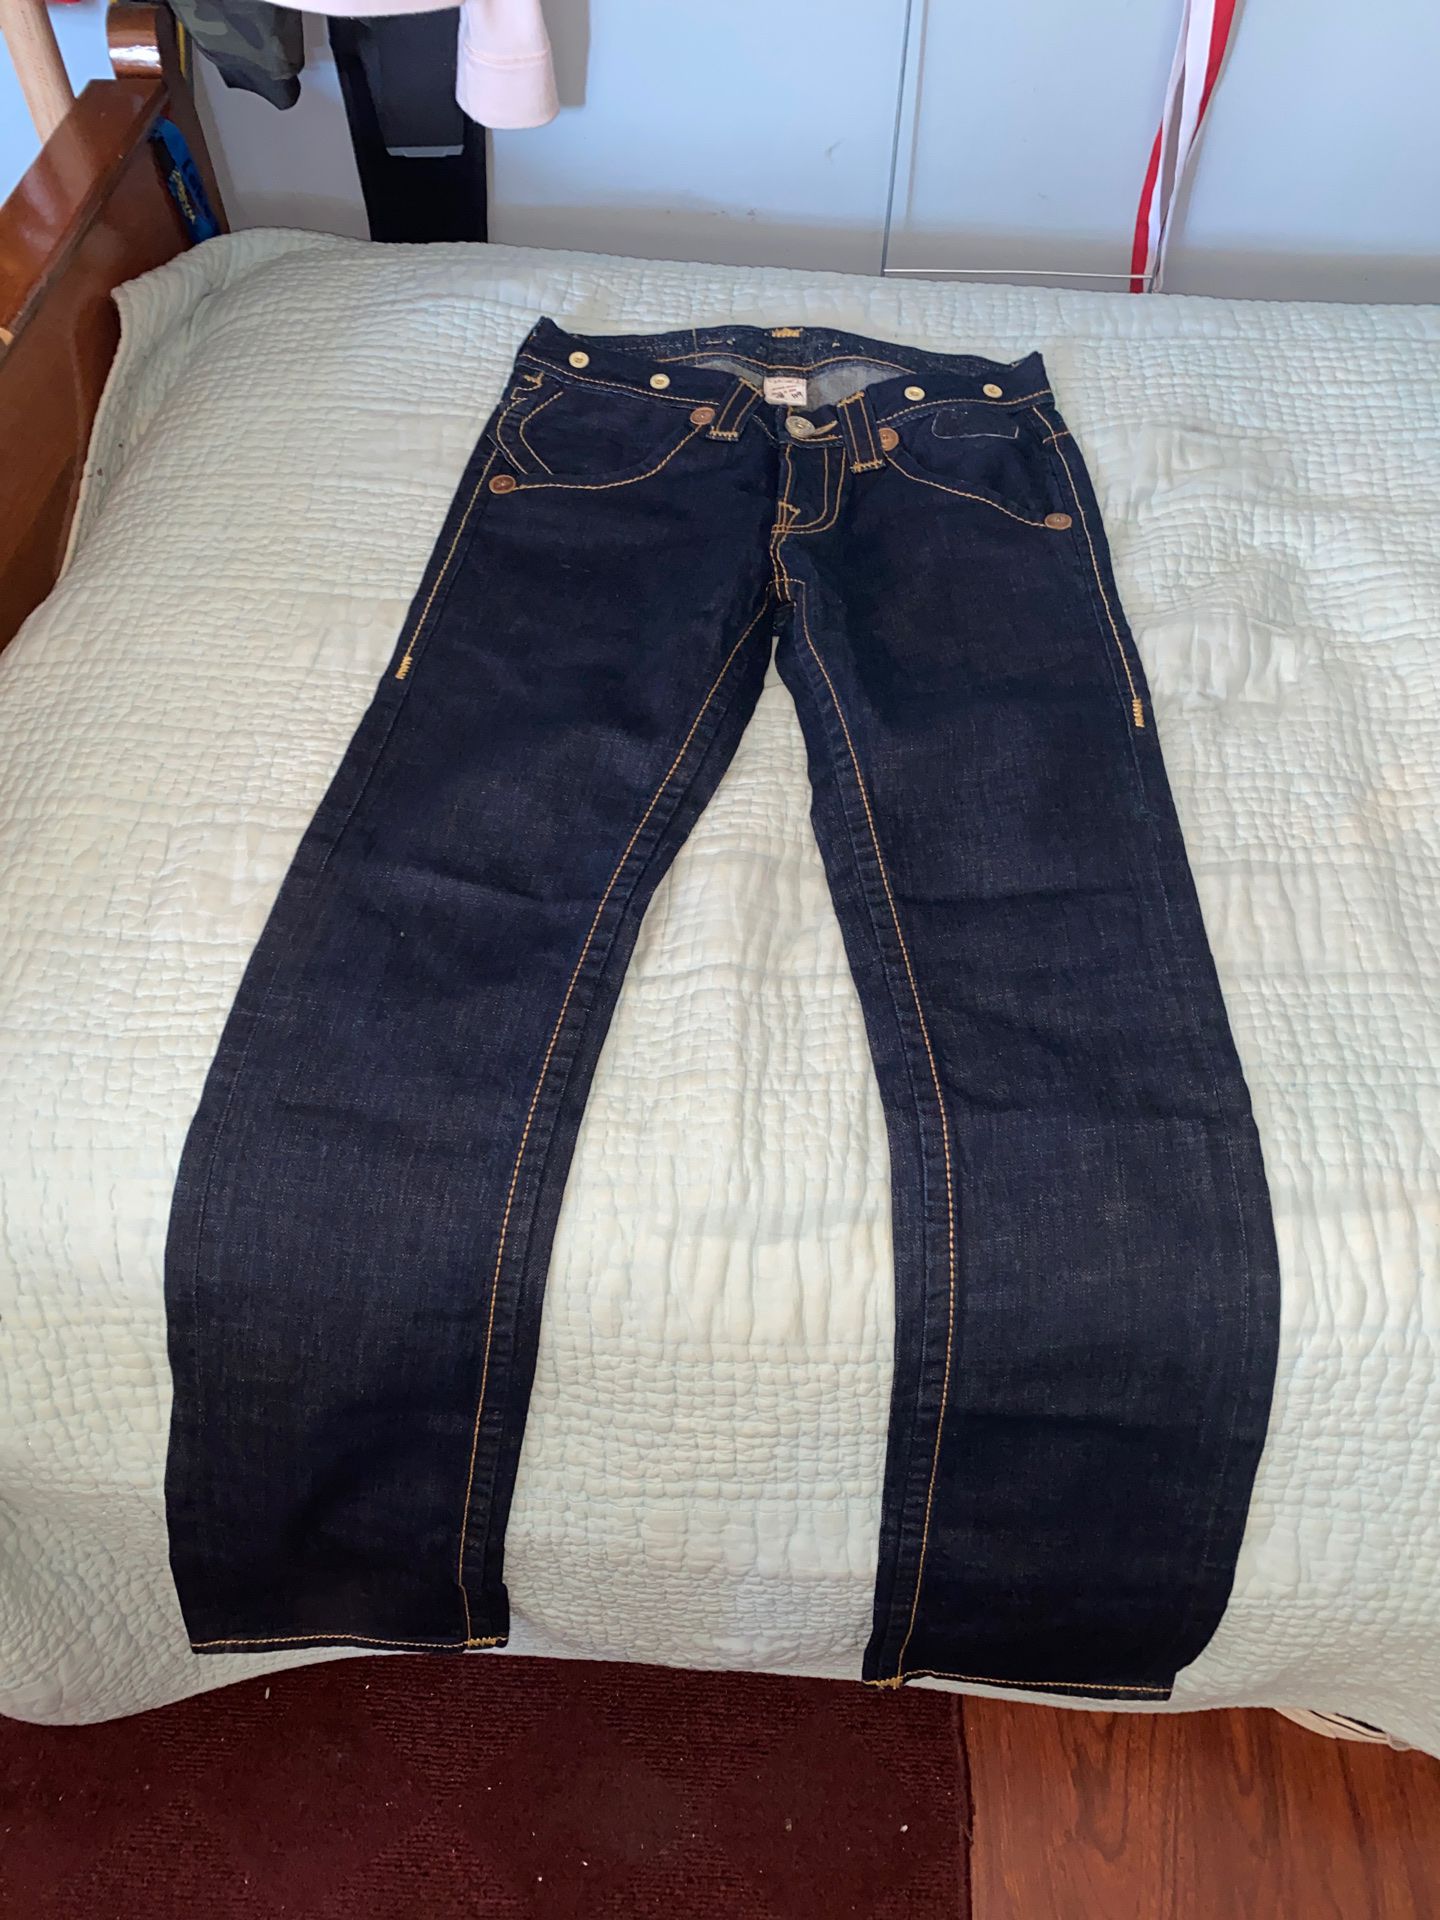 True religion jeans size 30